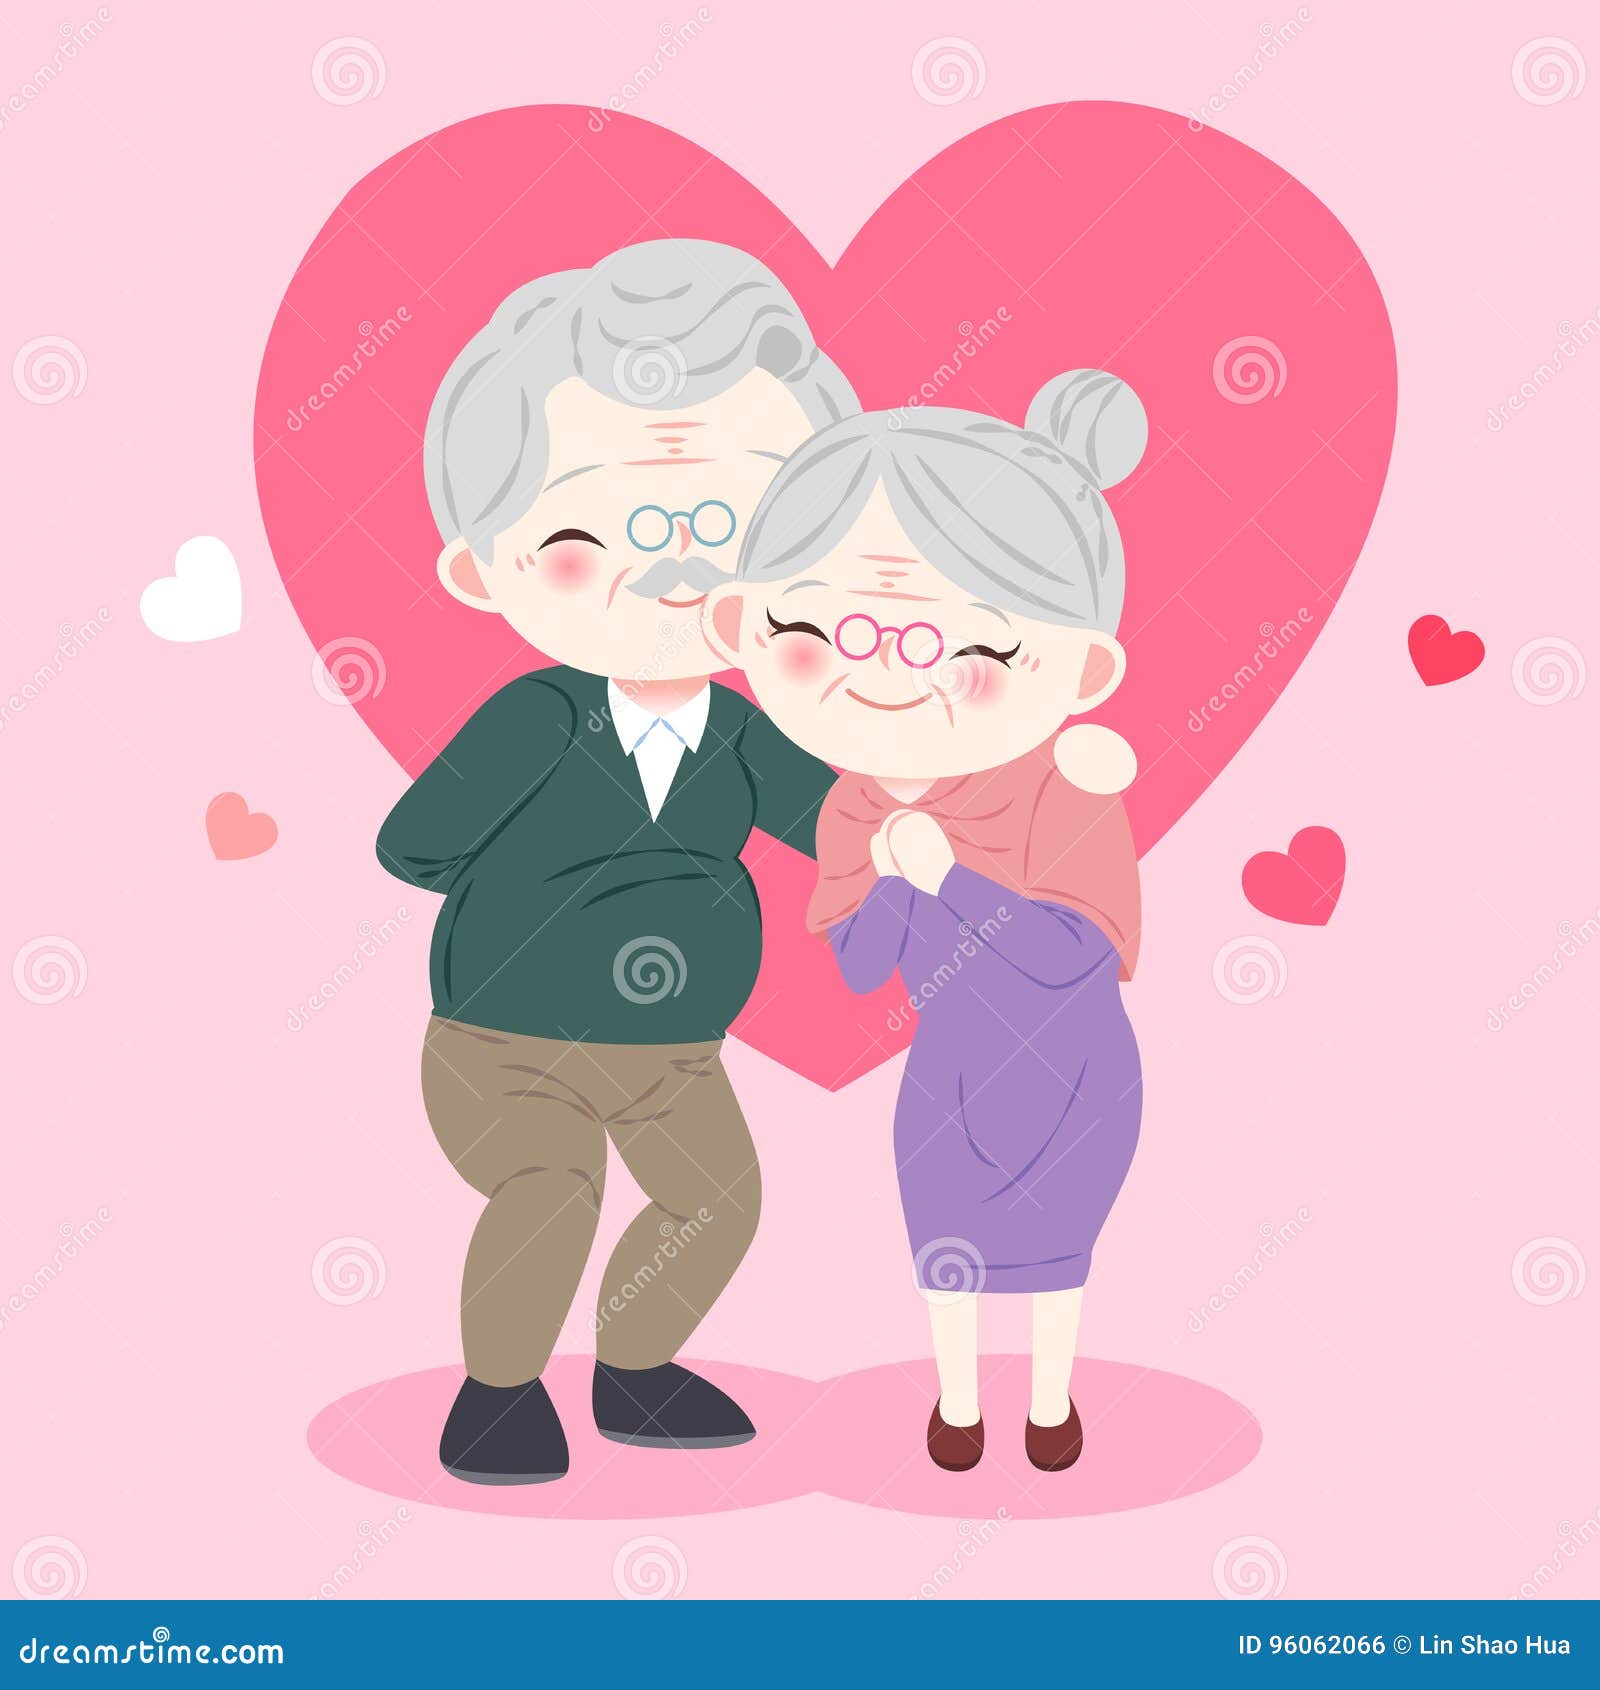 dorathi das add photo old couples cartoon images